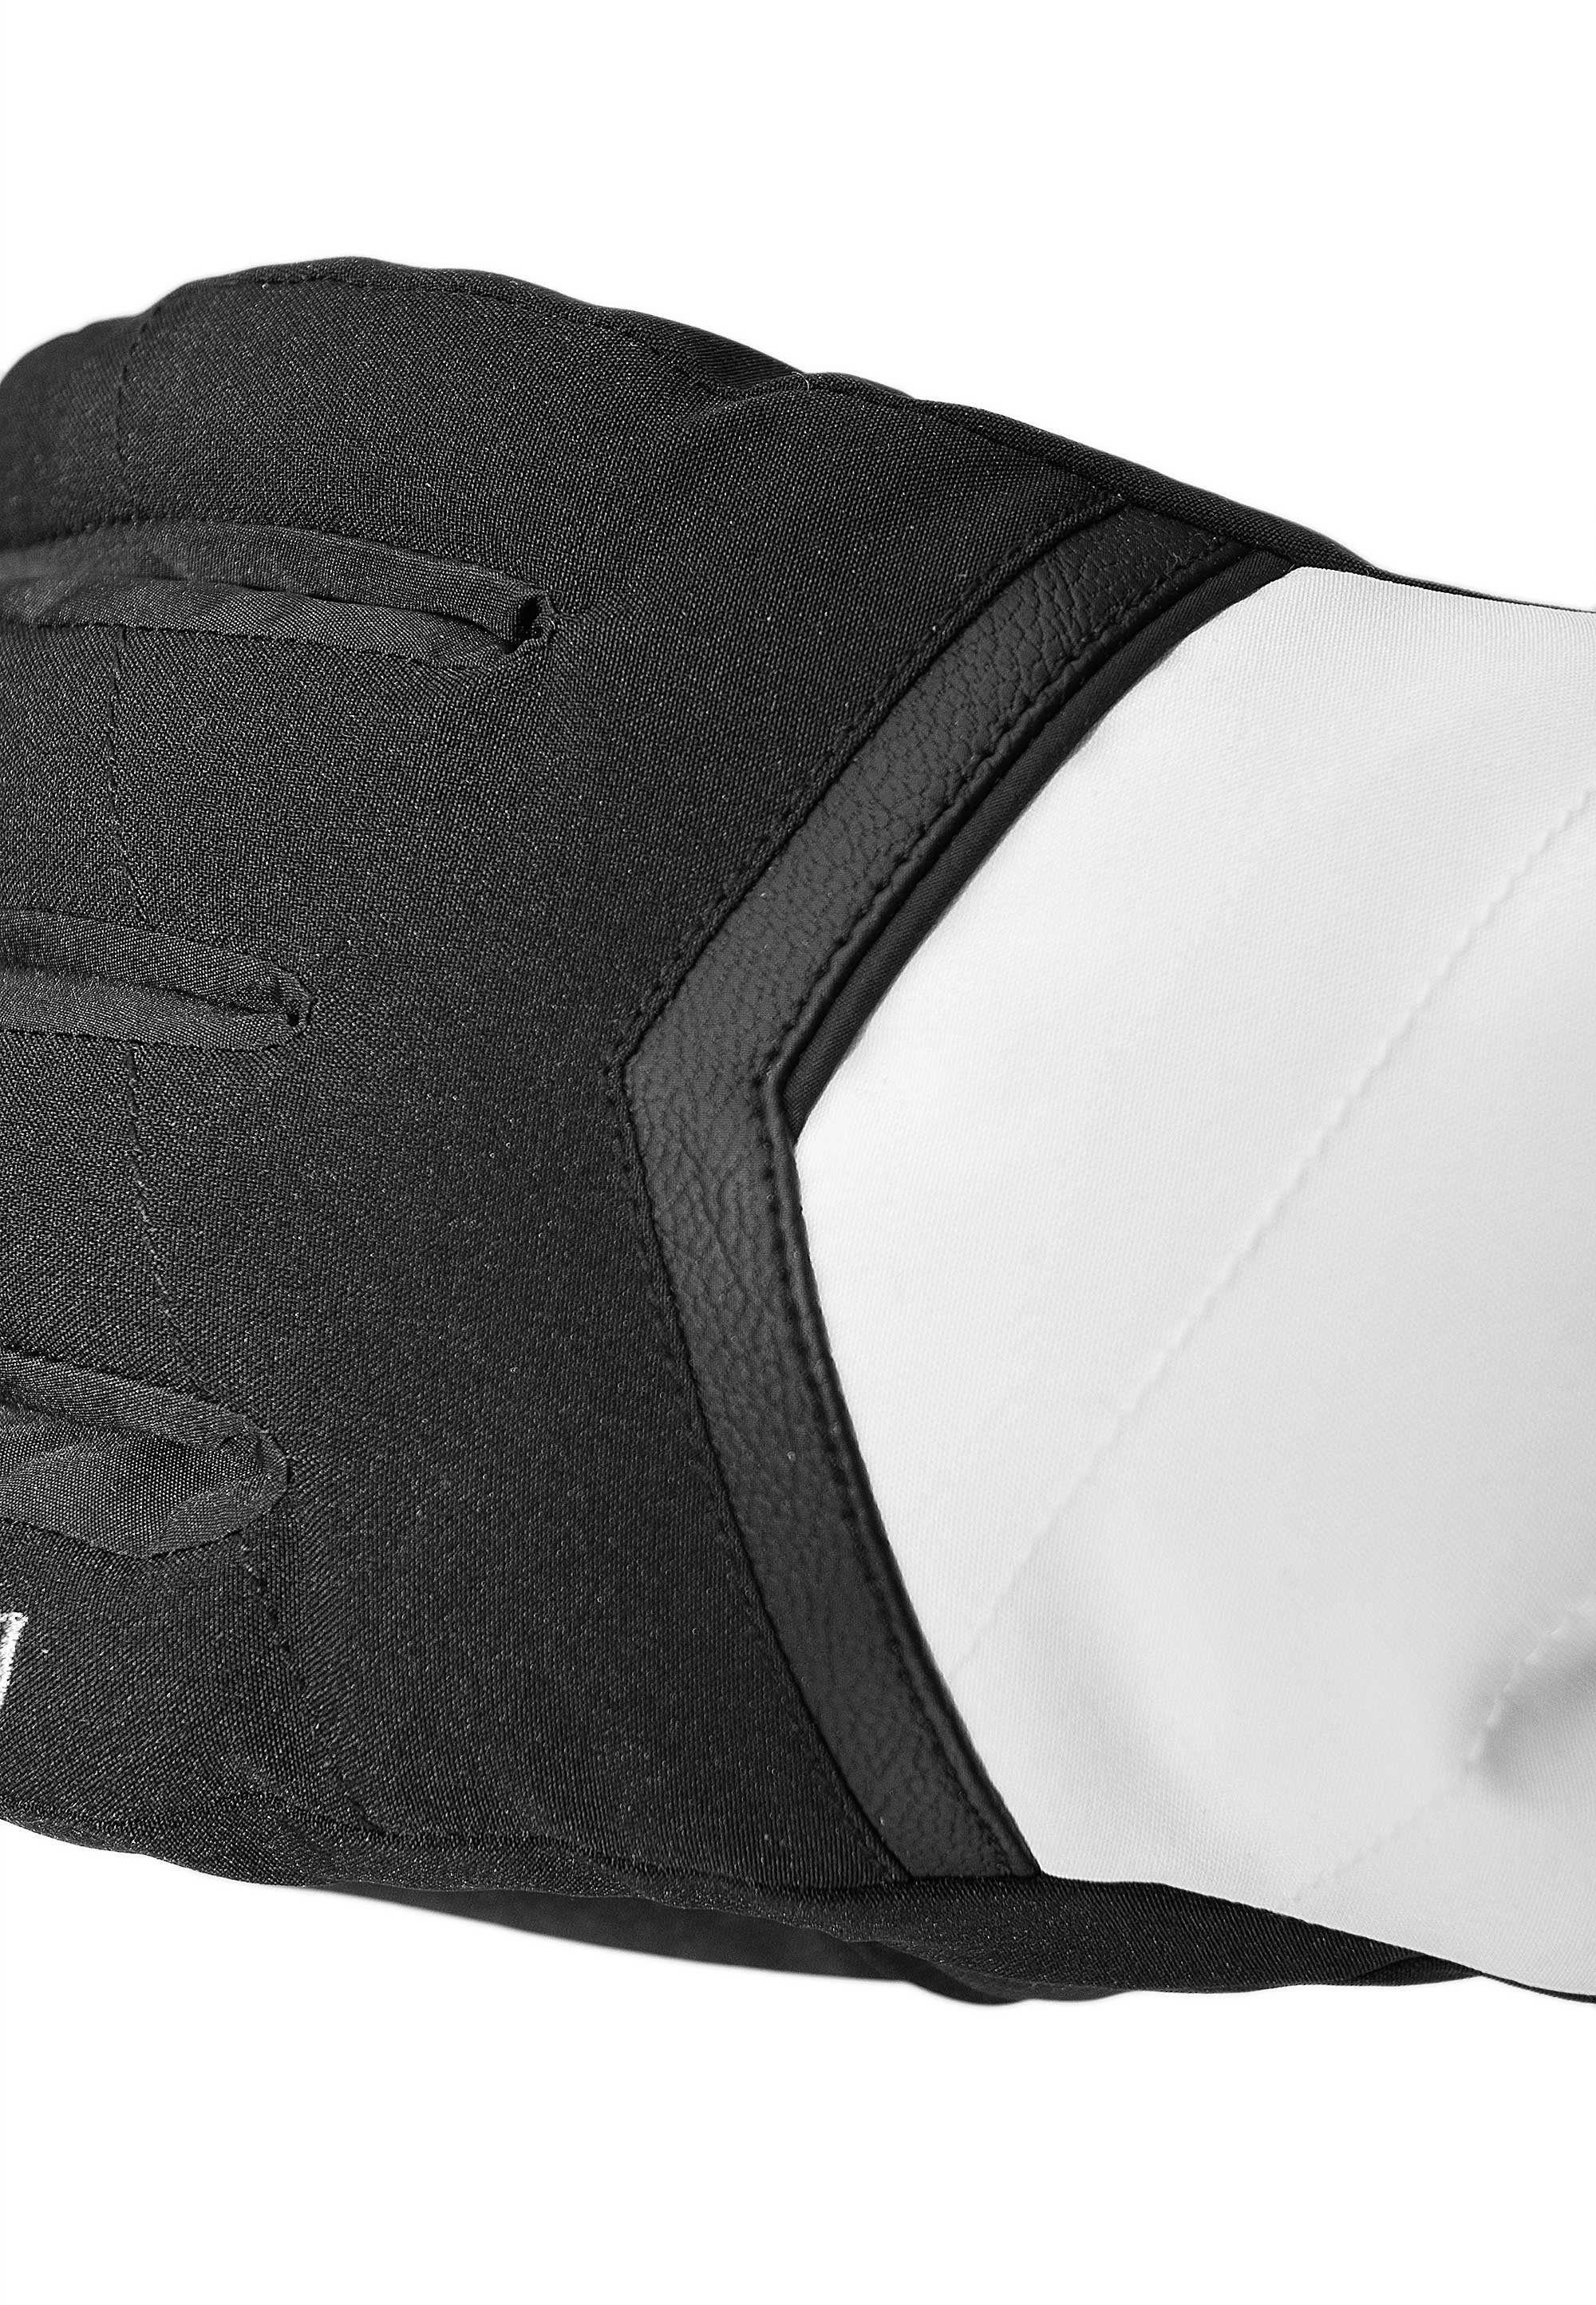 Reusch schwarz-weiß Skihandschuhe Moni R-TEX® mit XT innovativer Insert-Membran